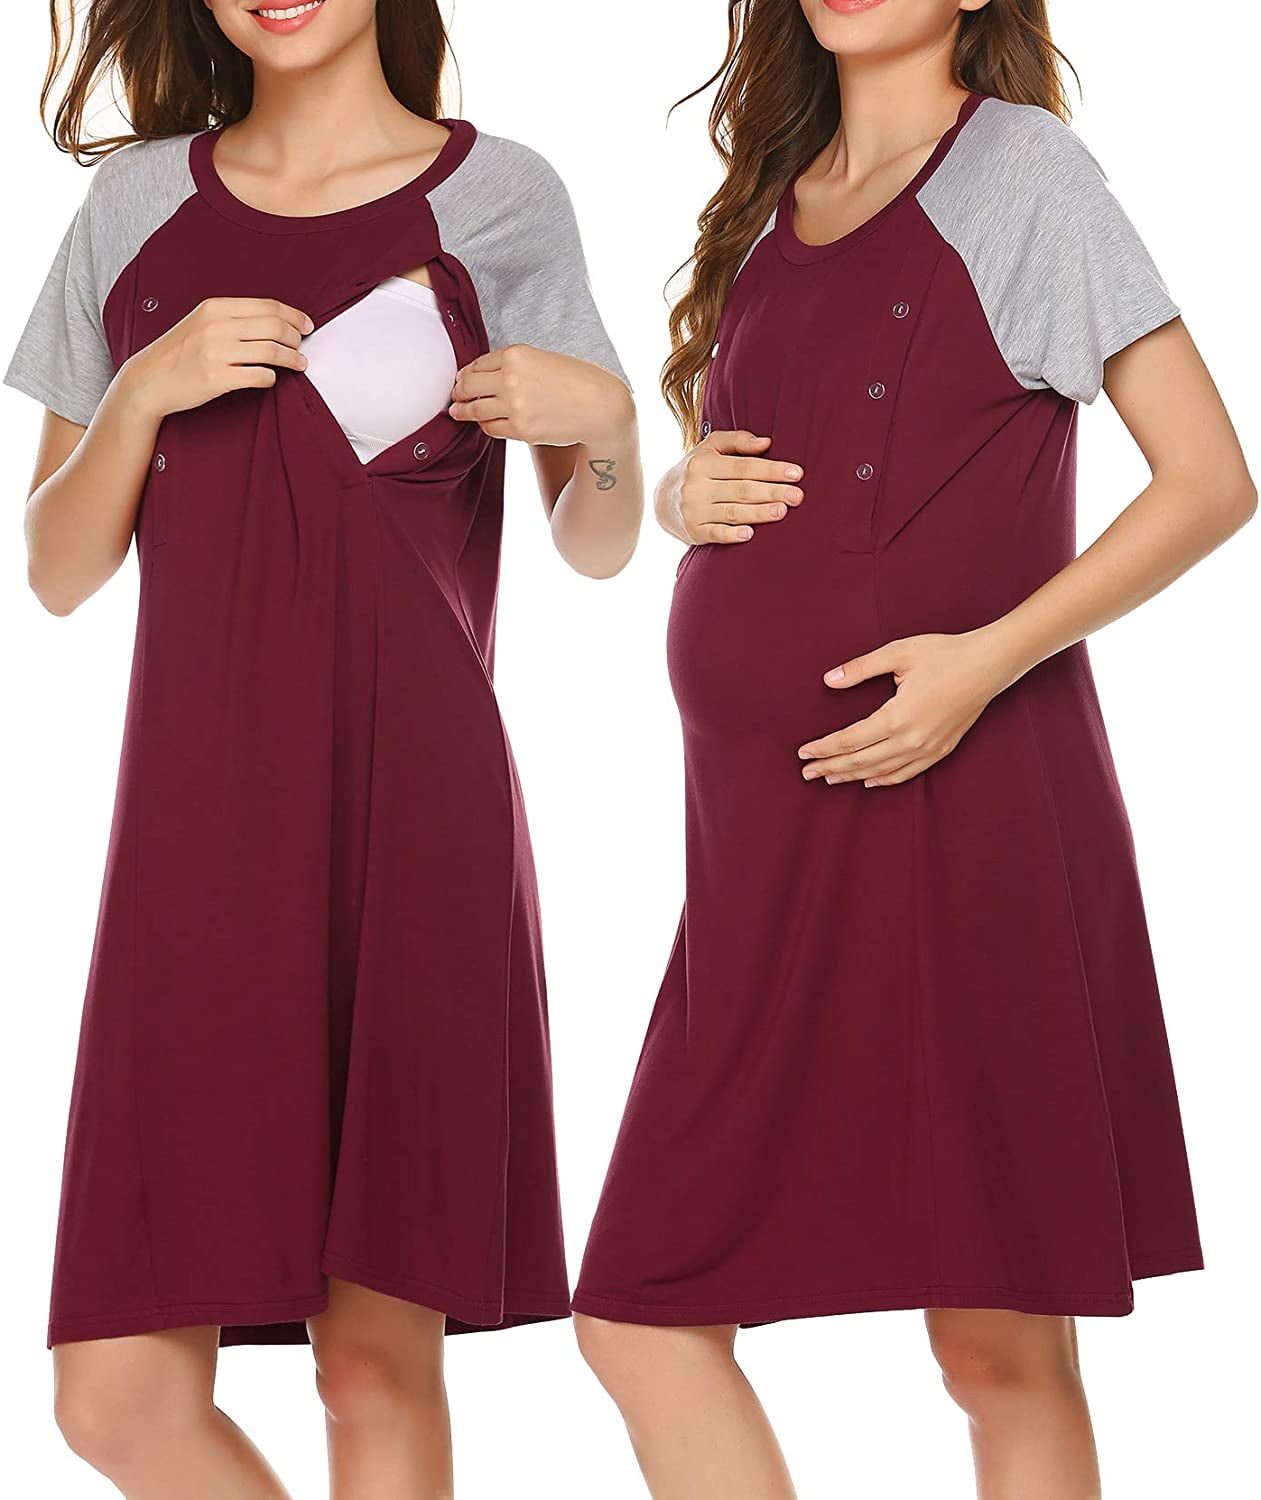 Ekouaer Maternity Nightgowns Nightshirts Nursing Gowns for Women  Breastfeeding Pregnancy Lady Comfy Sleep Lounge Nightwear Sleeveless  Nightgown Feeding Pjs Gray Small at Amazon Women's Clothing store